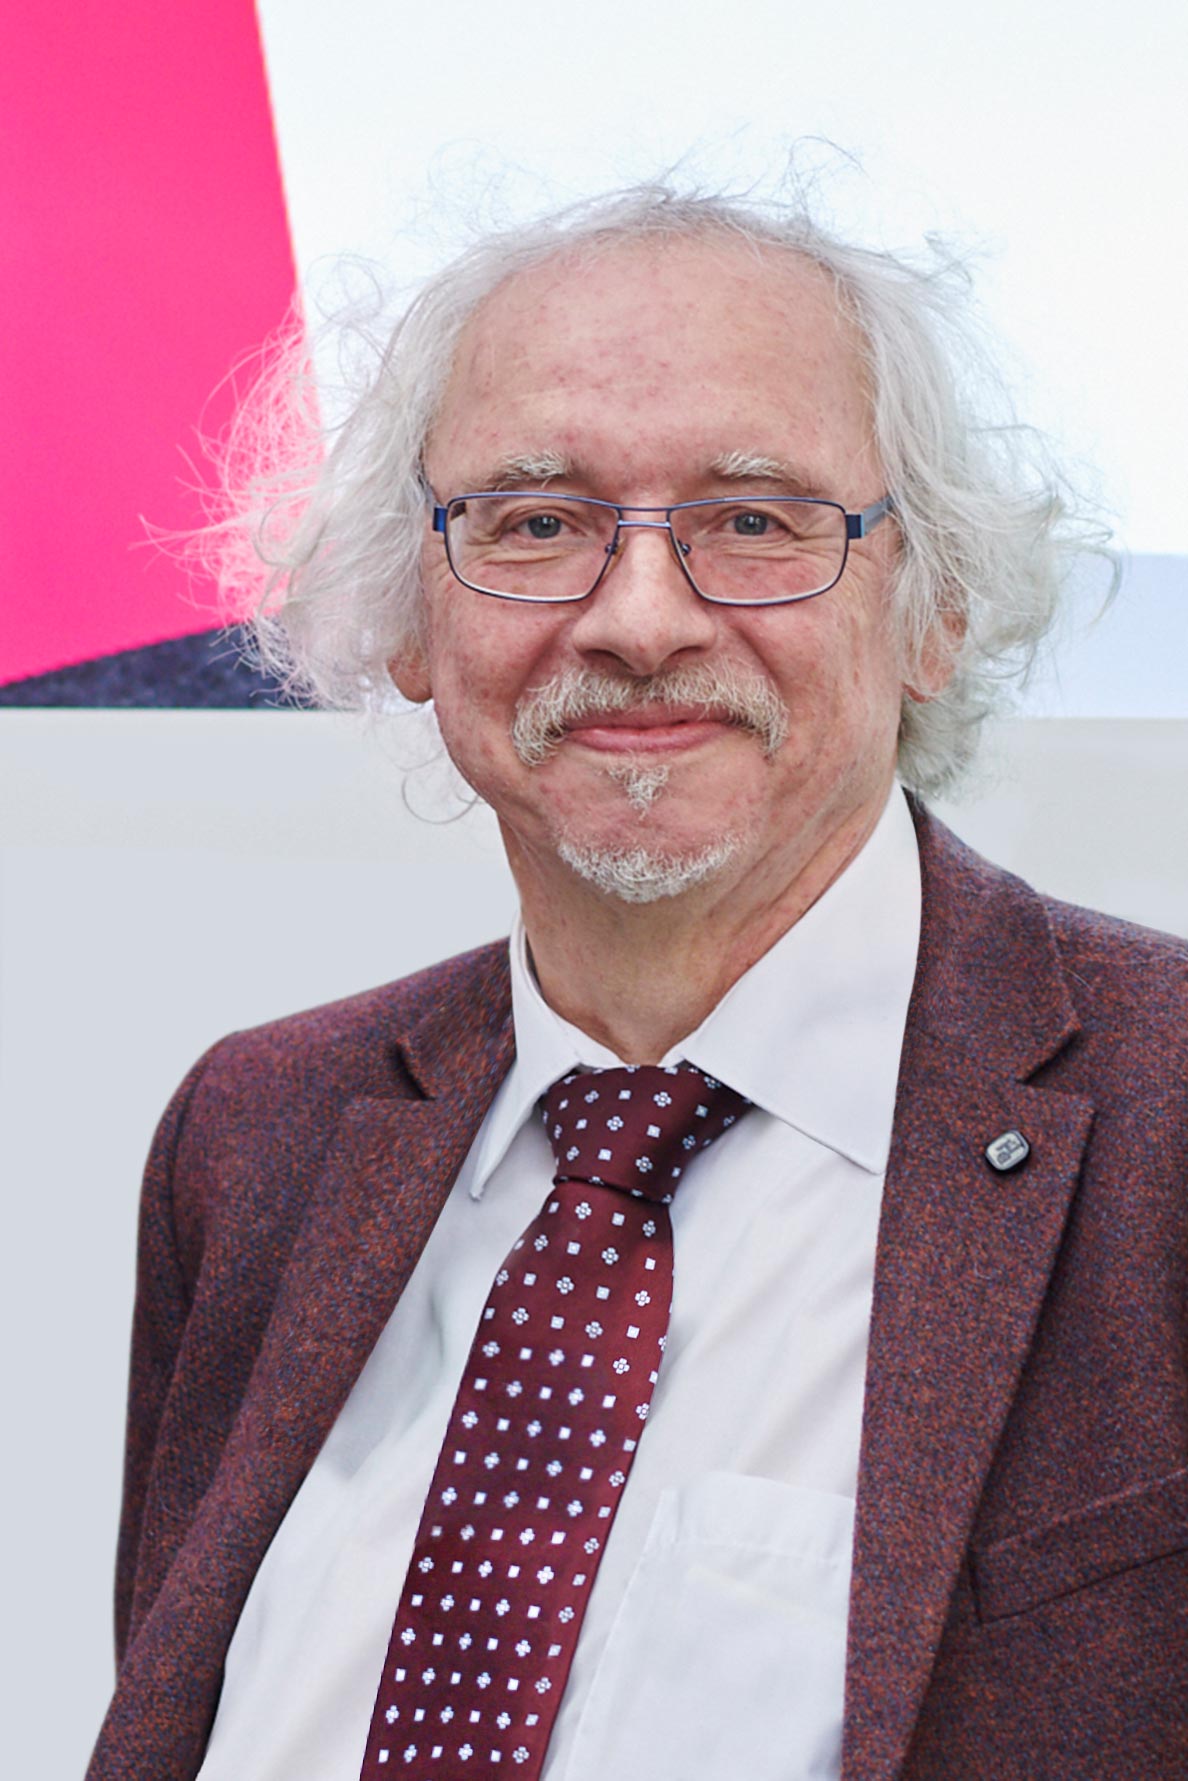 Portrait of Prof. Dr. Rudolf Pfaendner from the Fraunhofer Institute LBF.